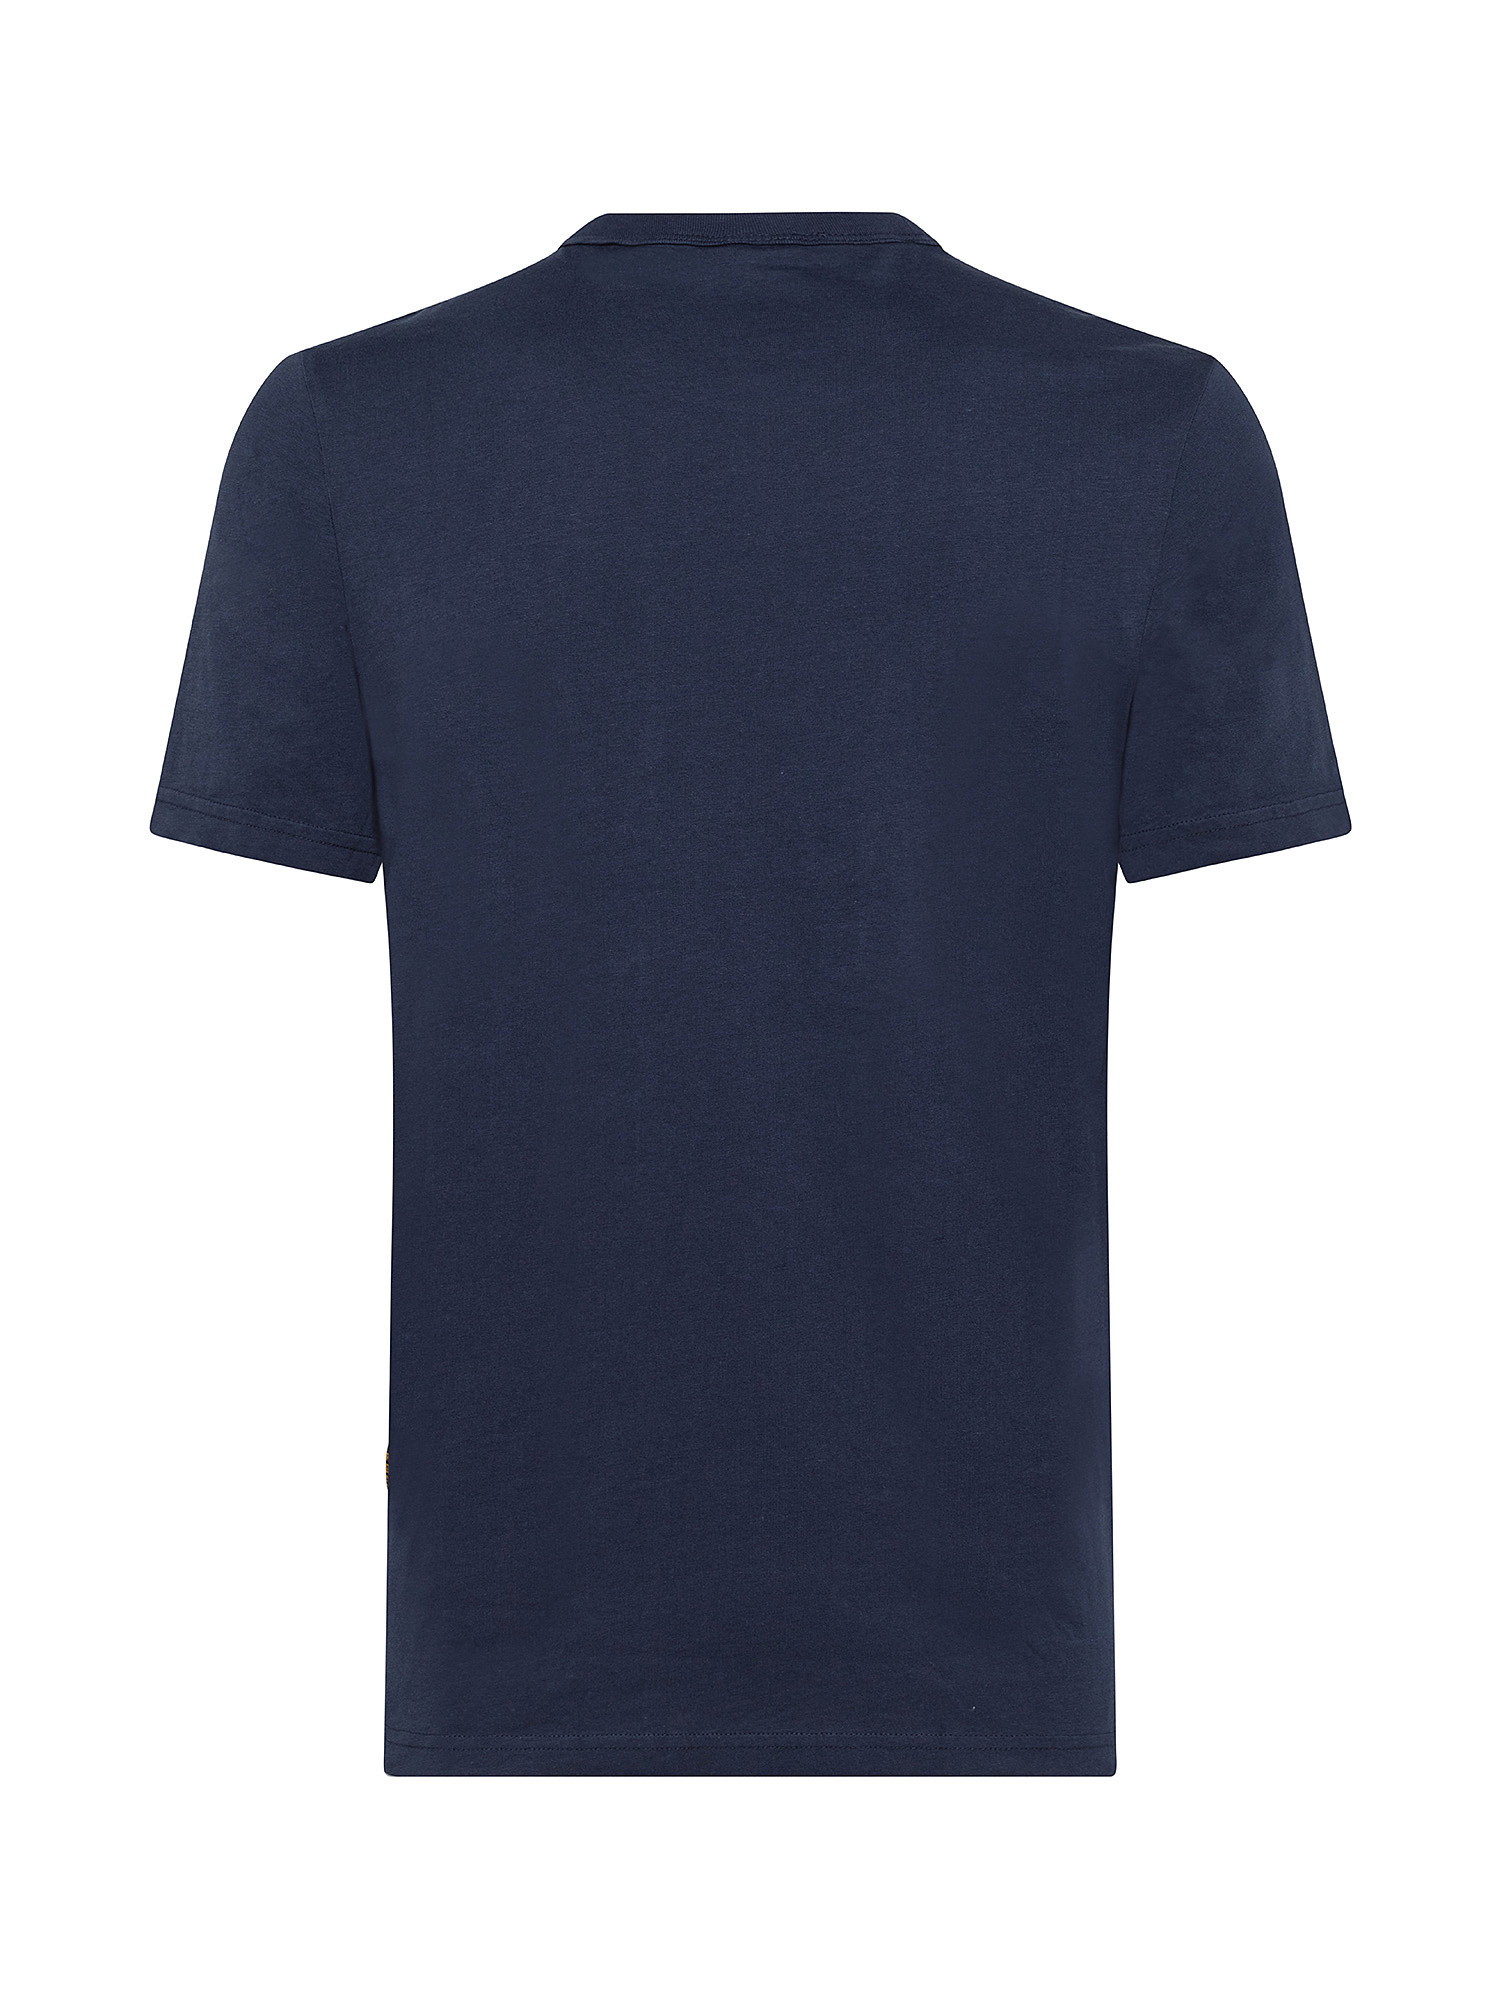 Raw t-shirt grafica slim, Blu, large image number 1